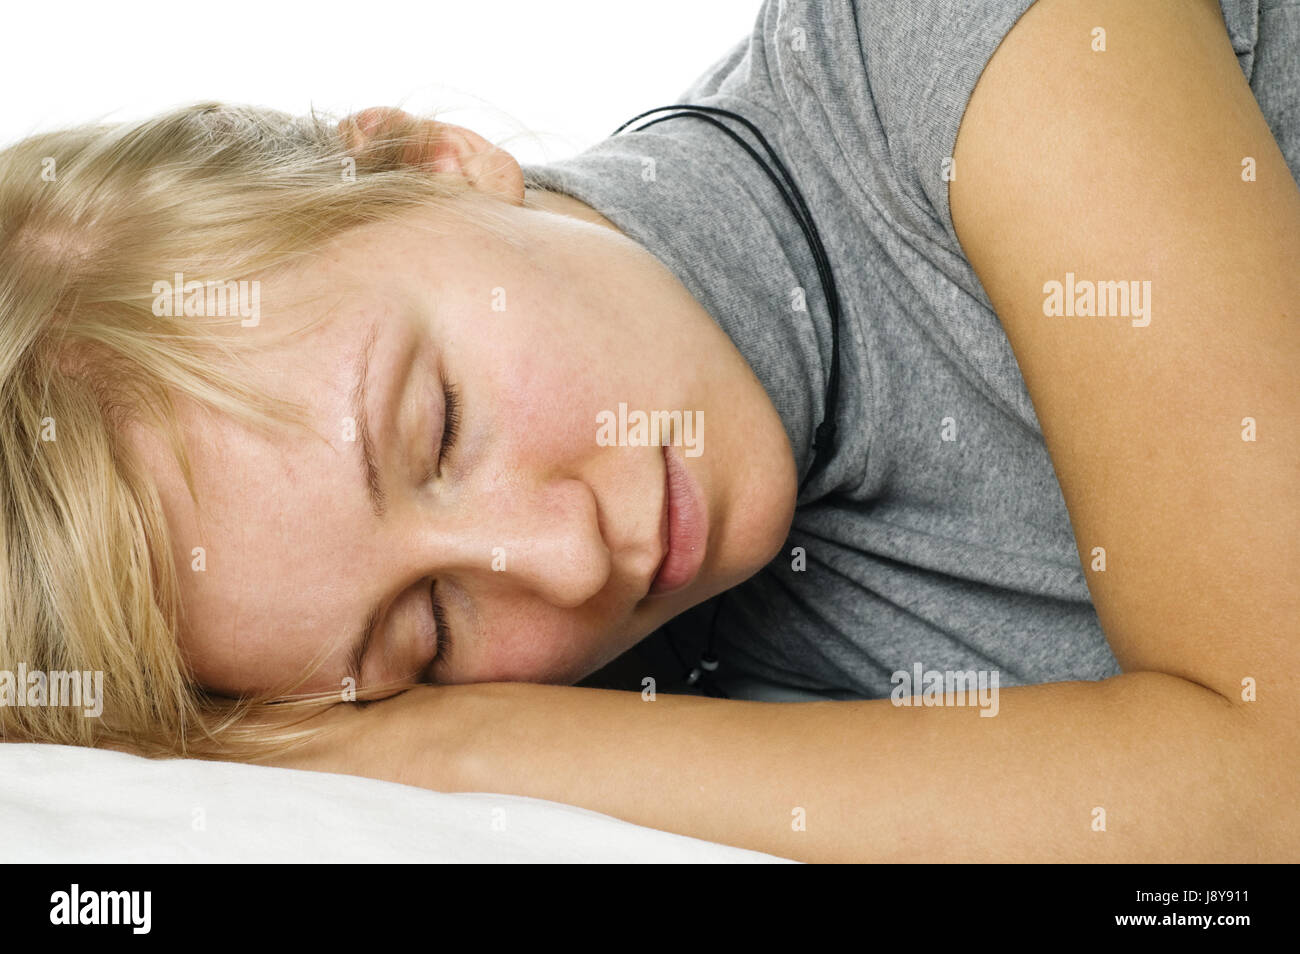 woman, face, portrait, dream, sleep, sleeping, facilitate, ease, resting, Stock Photo